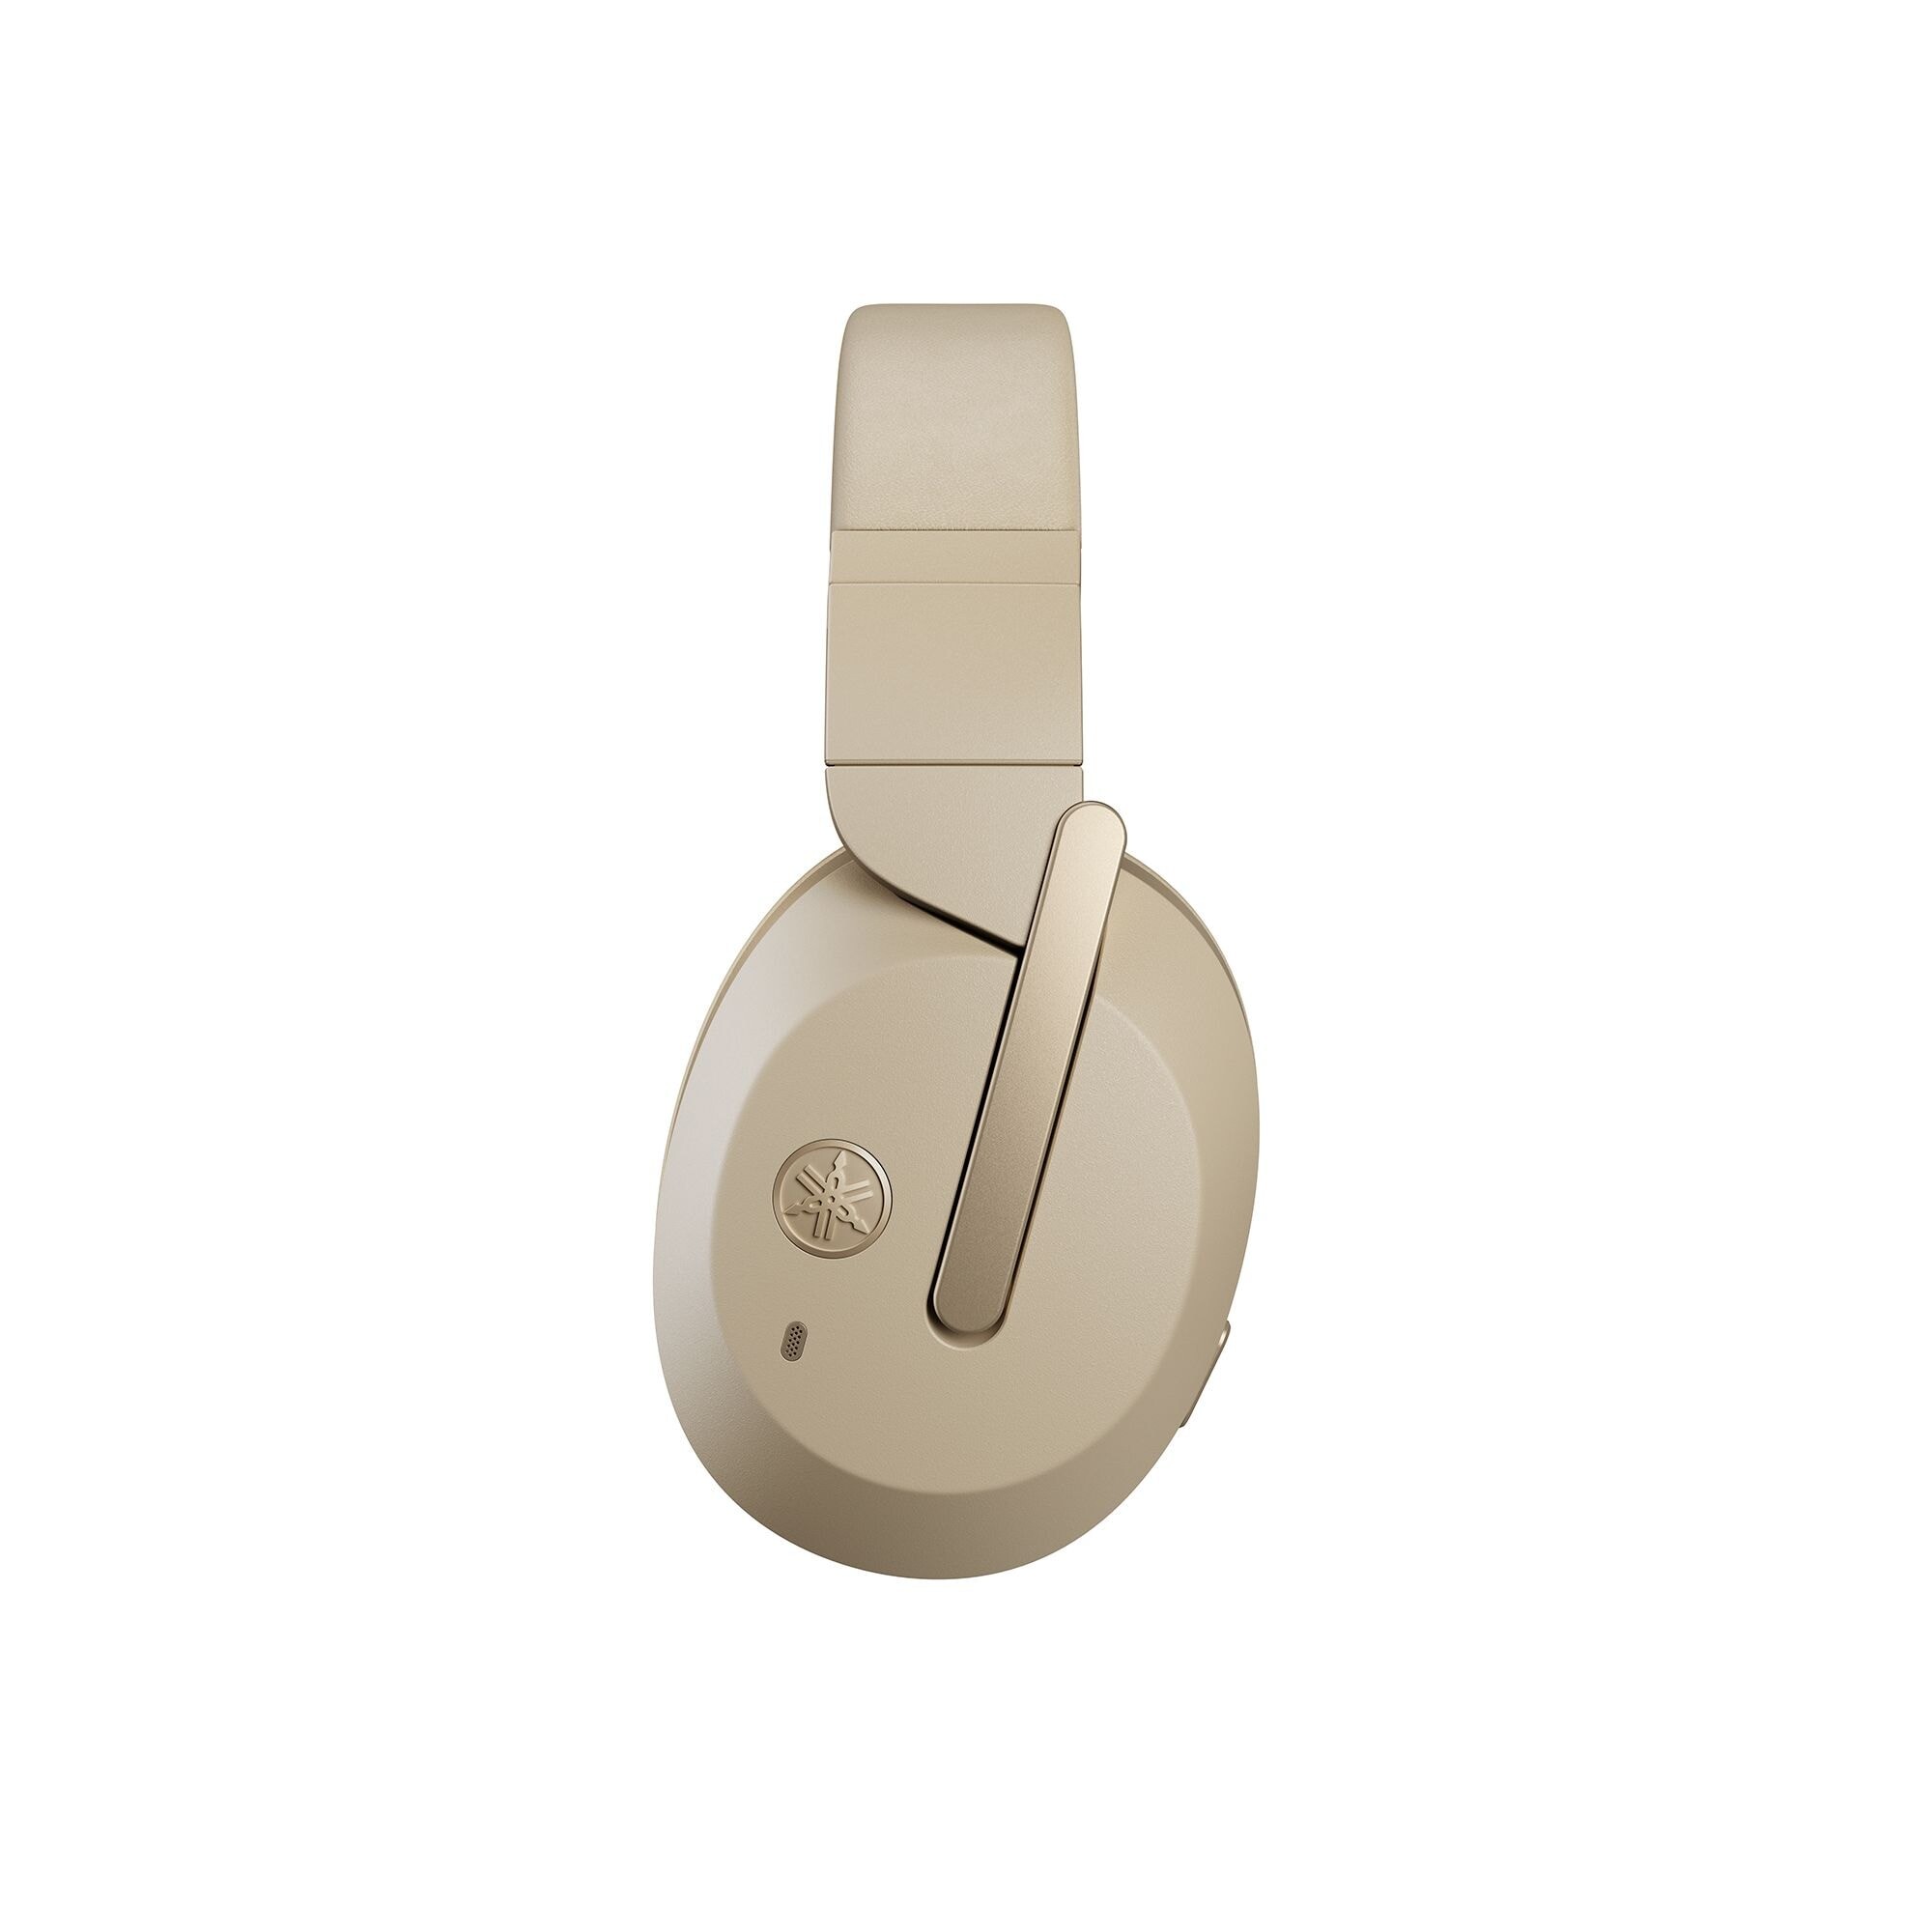 Yamaha-YH-E700B-Wireless-Over-Ear-Kopfhorer-beige